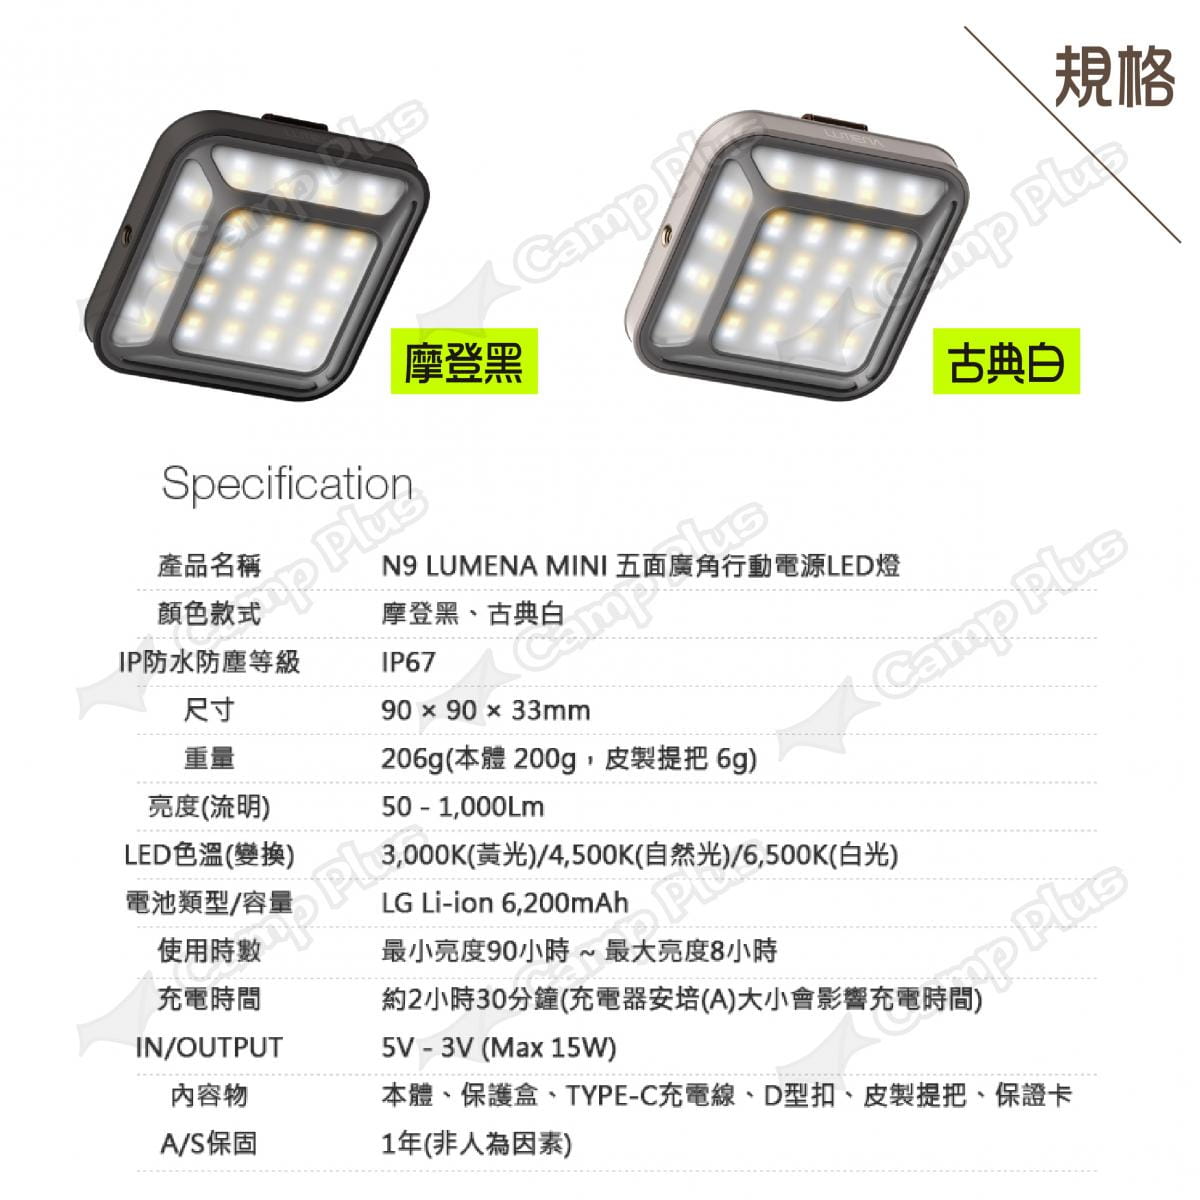 【N9 LUMENA】MINI 五面廣角行動電源LED燈 (悠遊戶外) 9